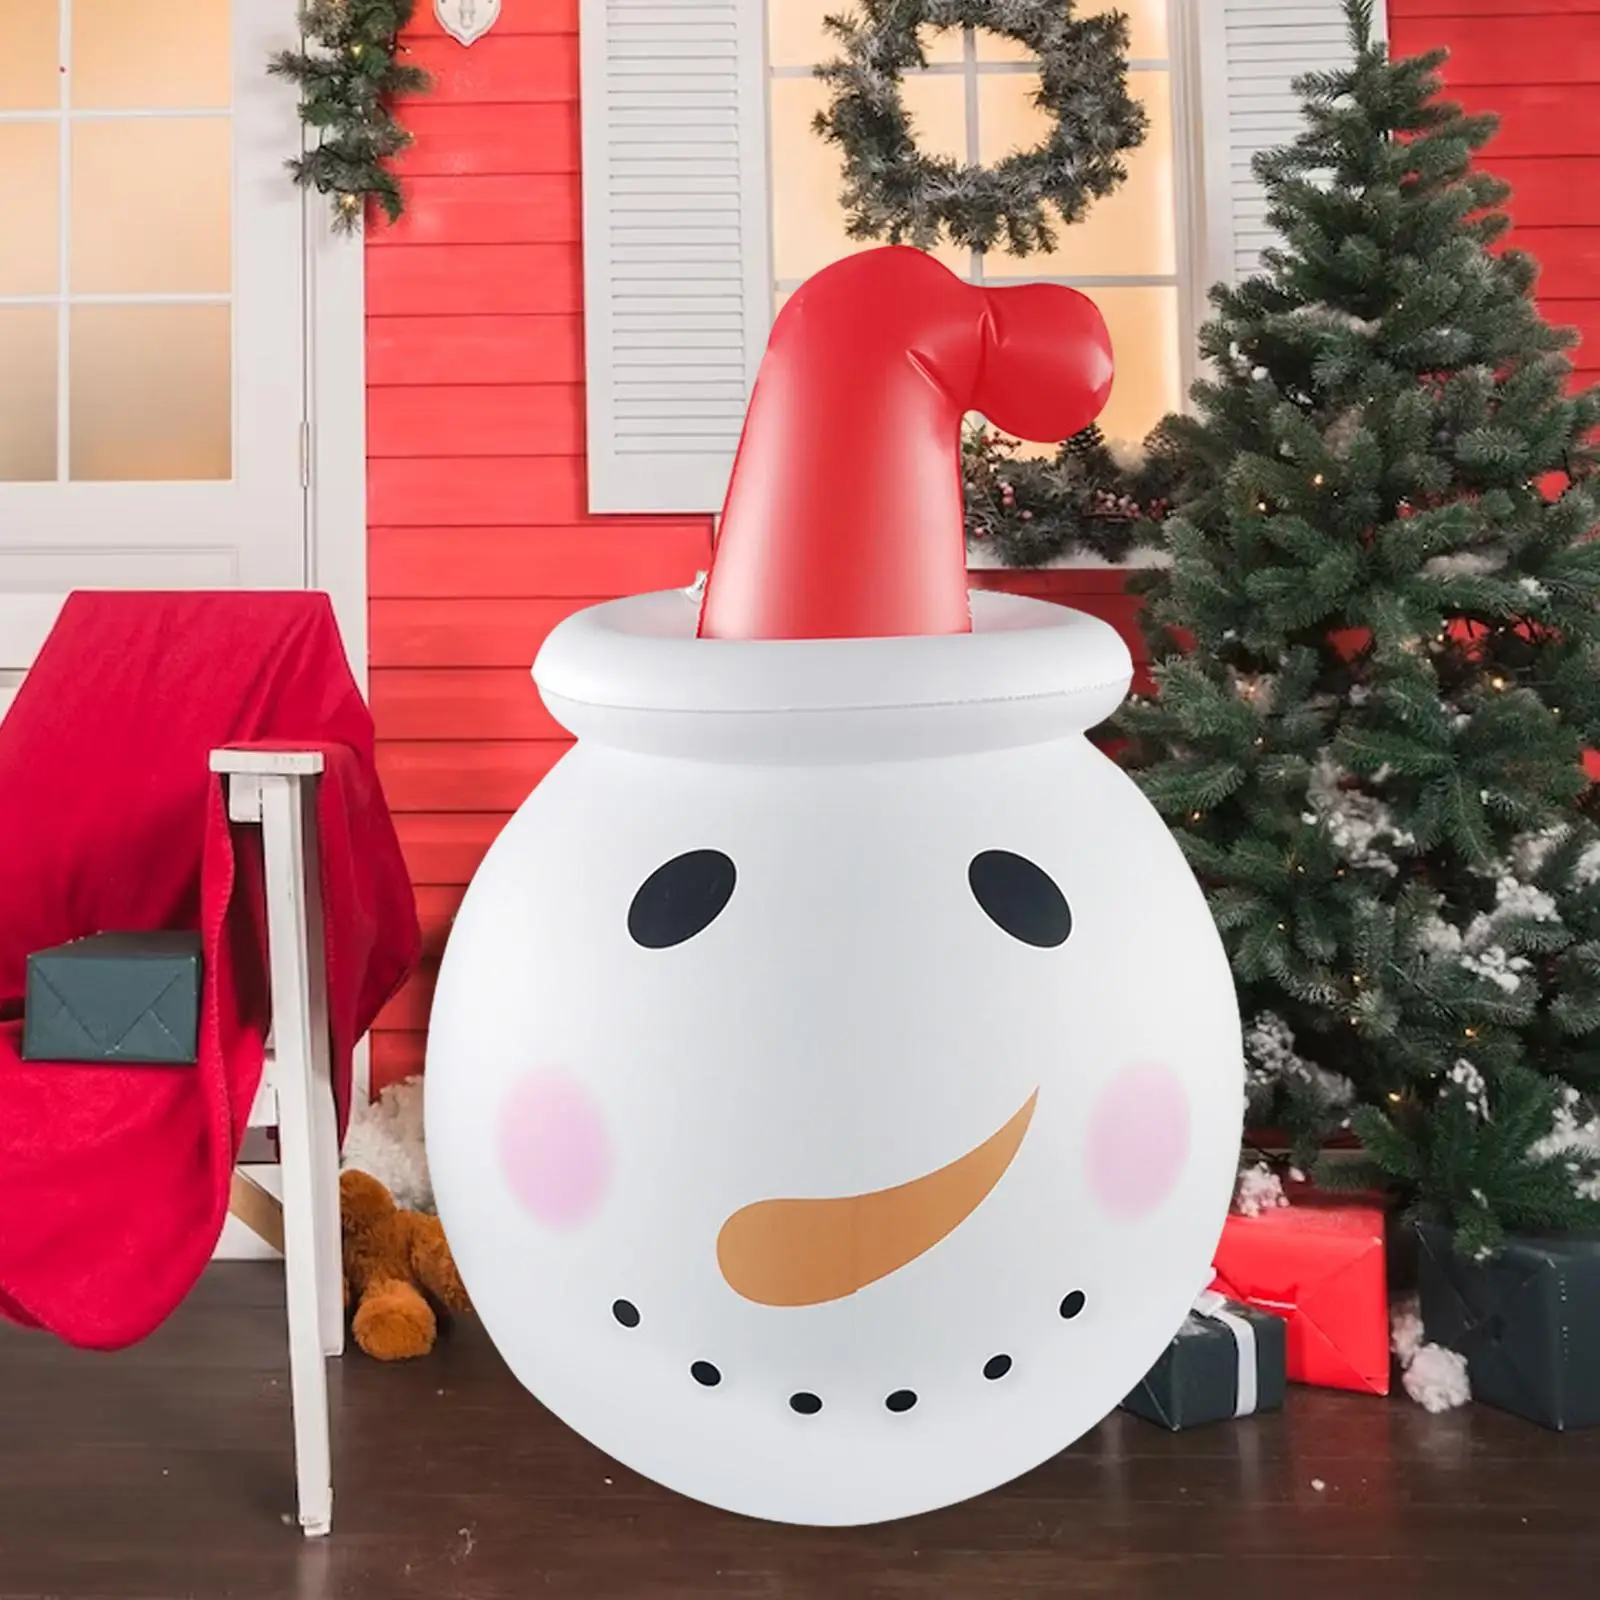 Christmas Inflatable Snowman Ornament Artwork Cute Creative Night Light Xmas Snowball Decor for Cafe Backyard Home Year